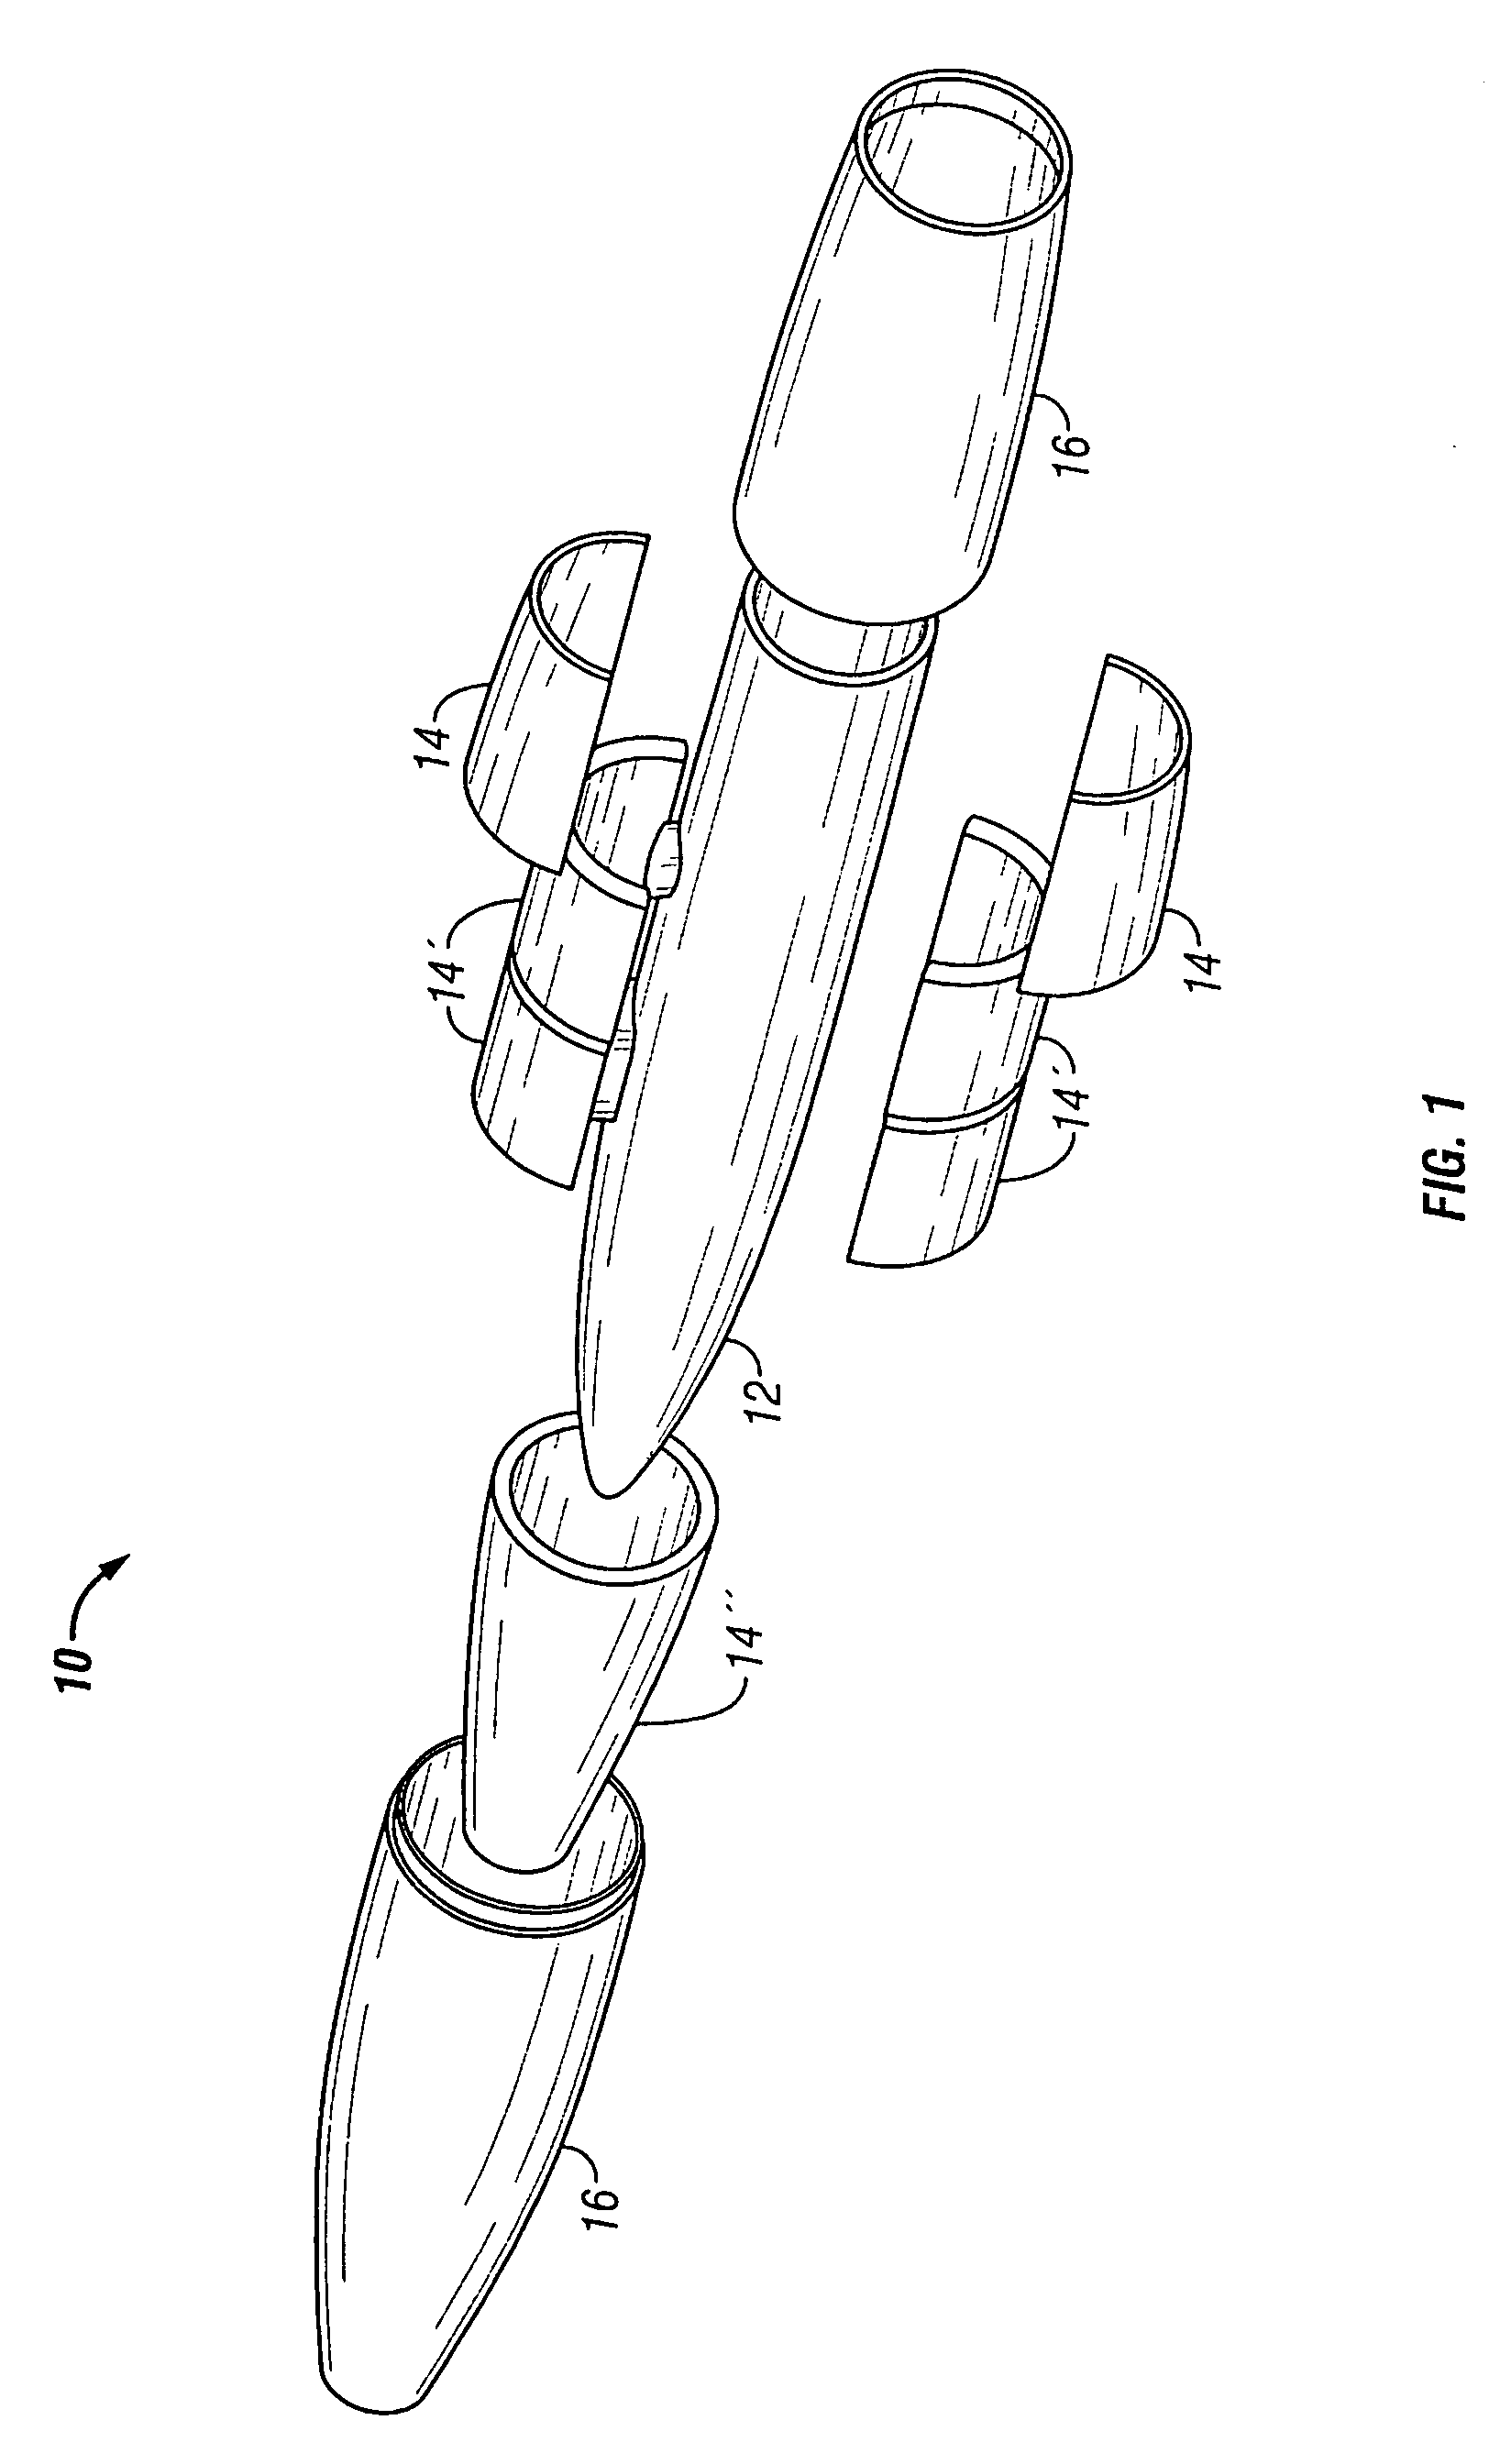 Insensitive munition design for shrouded penetrators